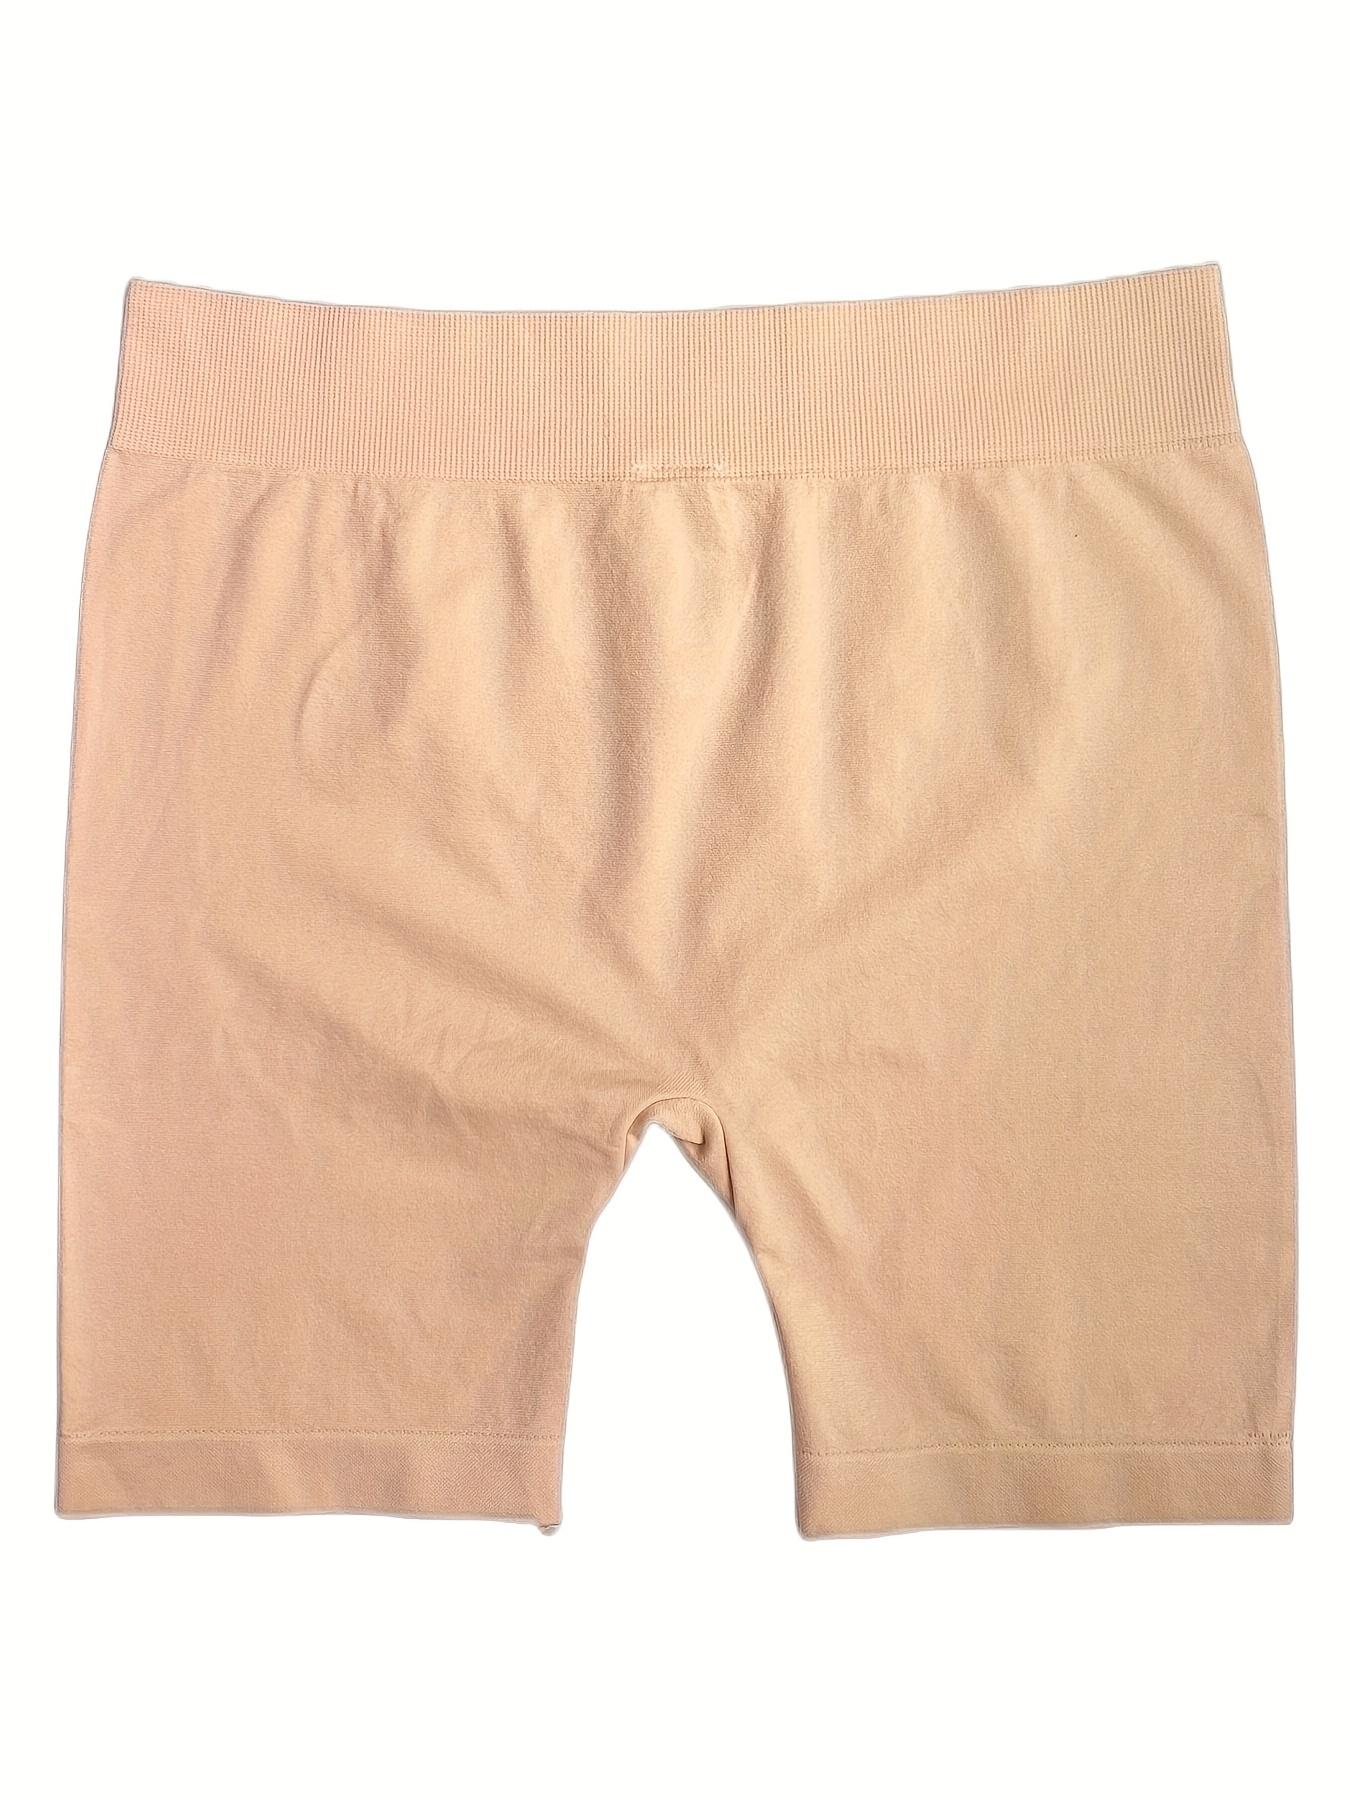 Women's Slip Shorts Comfortable Short Pants Ultra Soft Seamless Long Briefs  For Under Dresses Leggings And Yoga